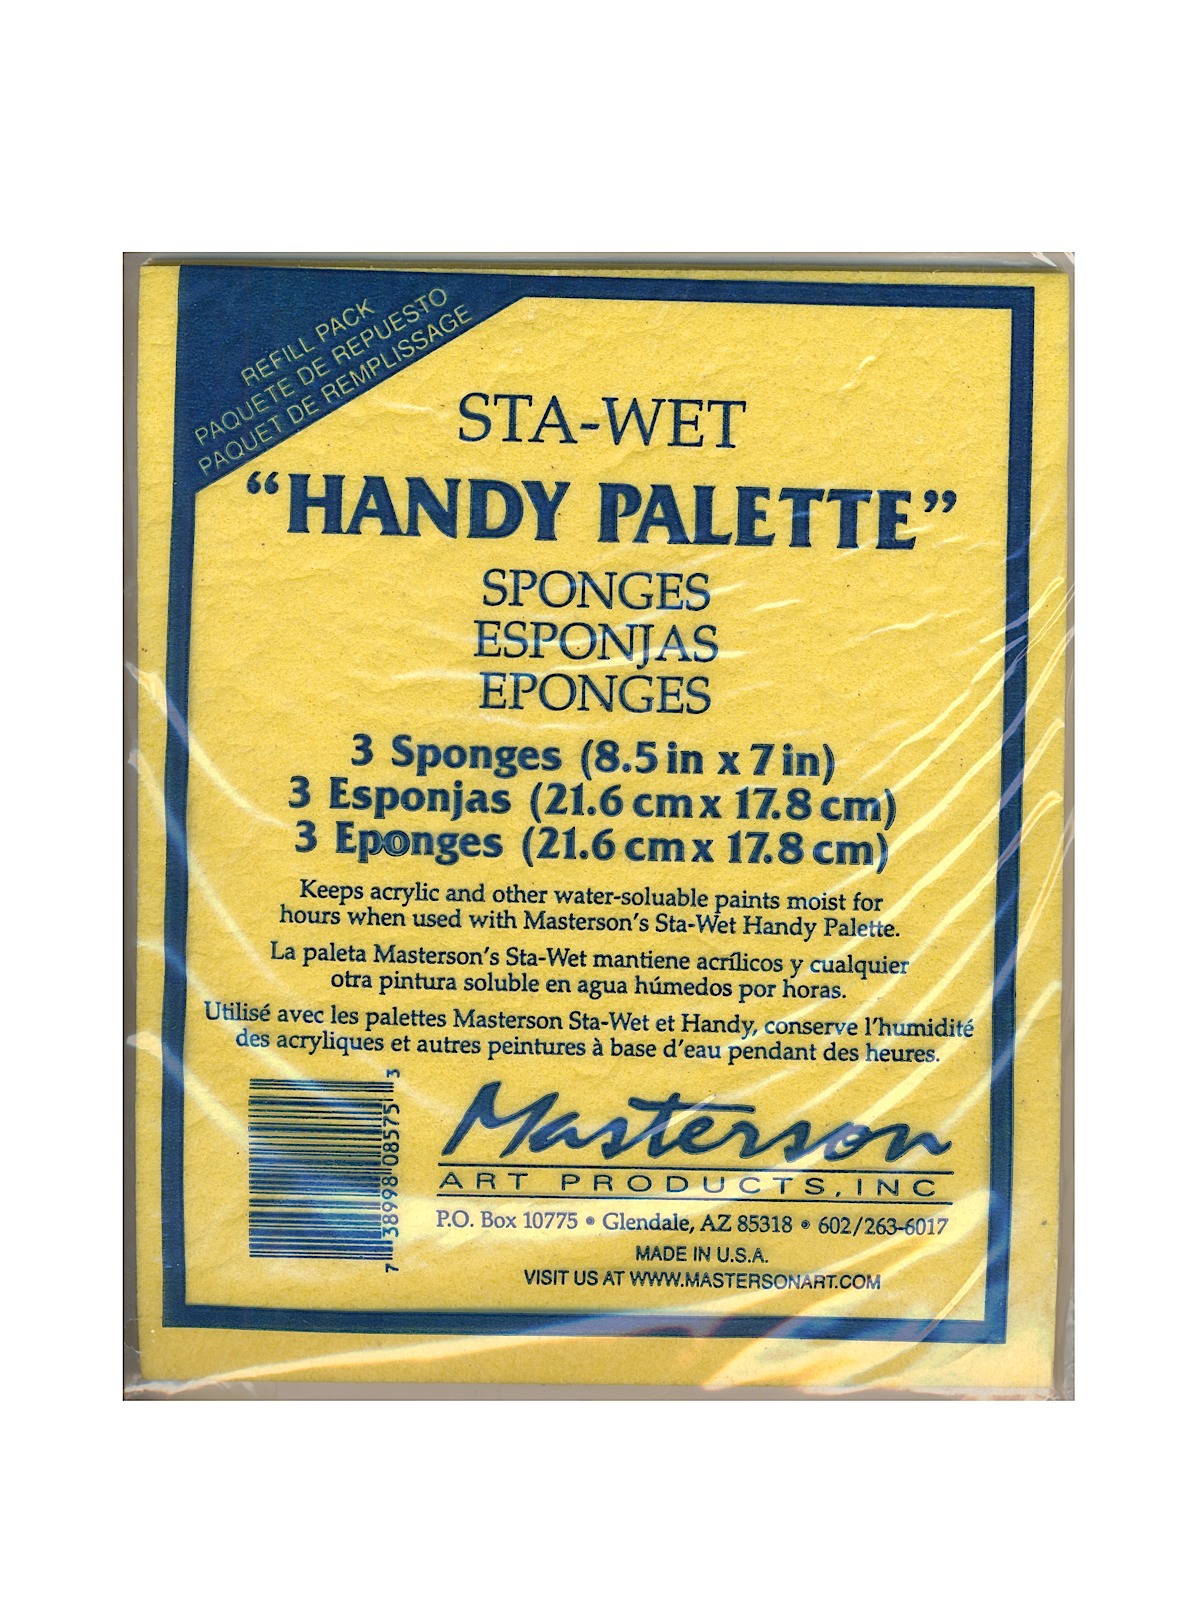 Sta-wet Handy Palette Pack Of 3 Handy Palette Sponges 8 1 2 In. X 7 In.